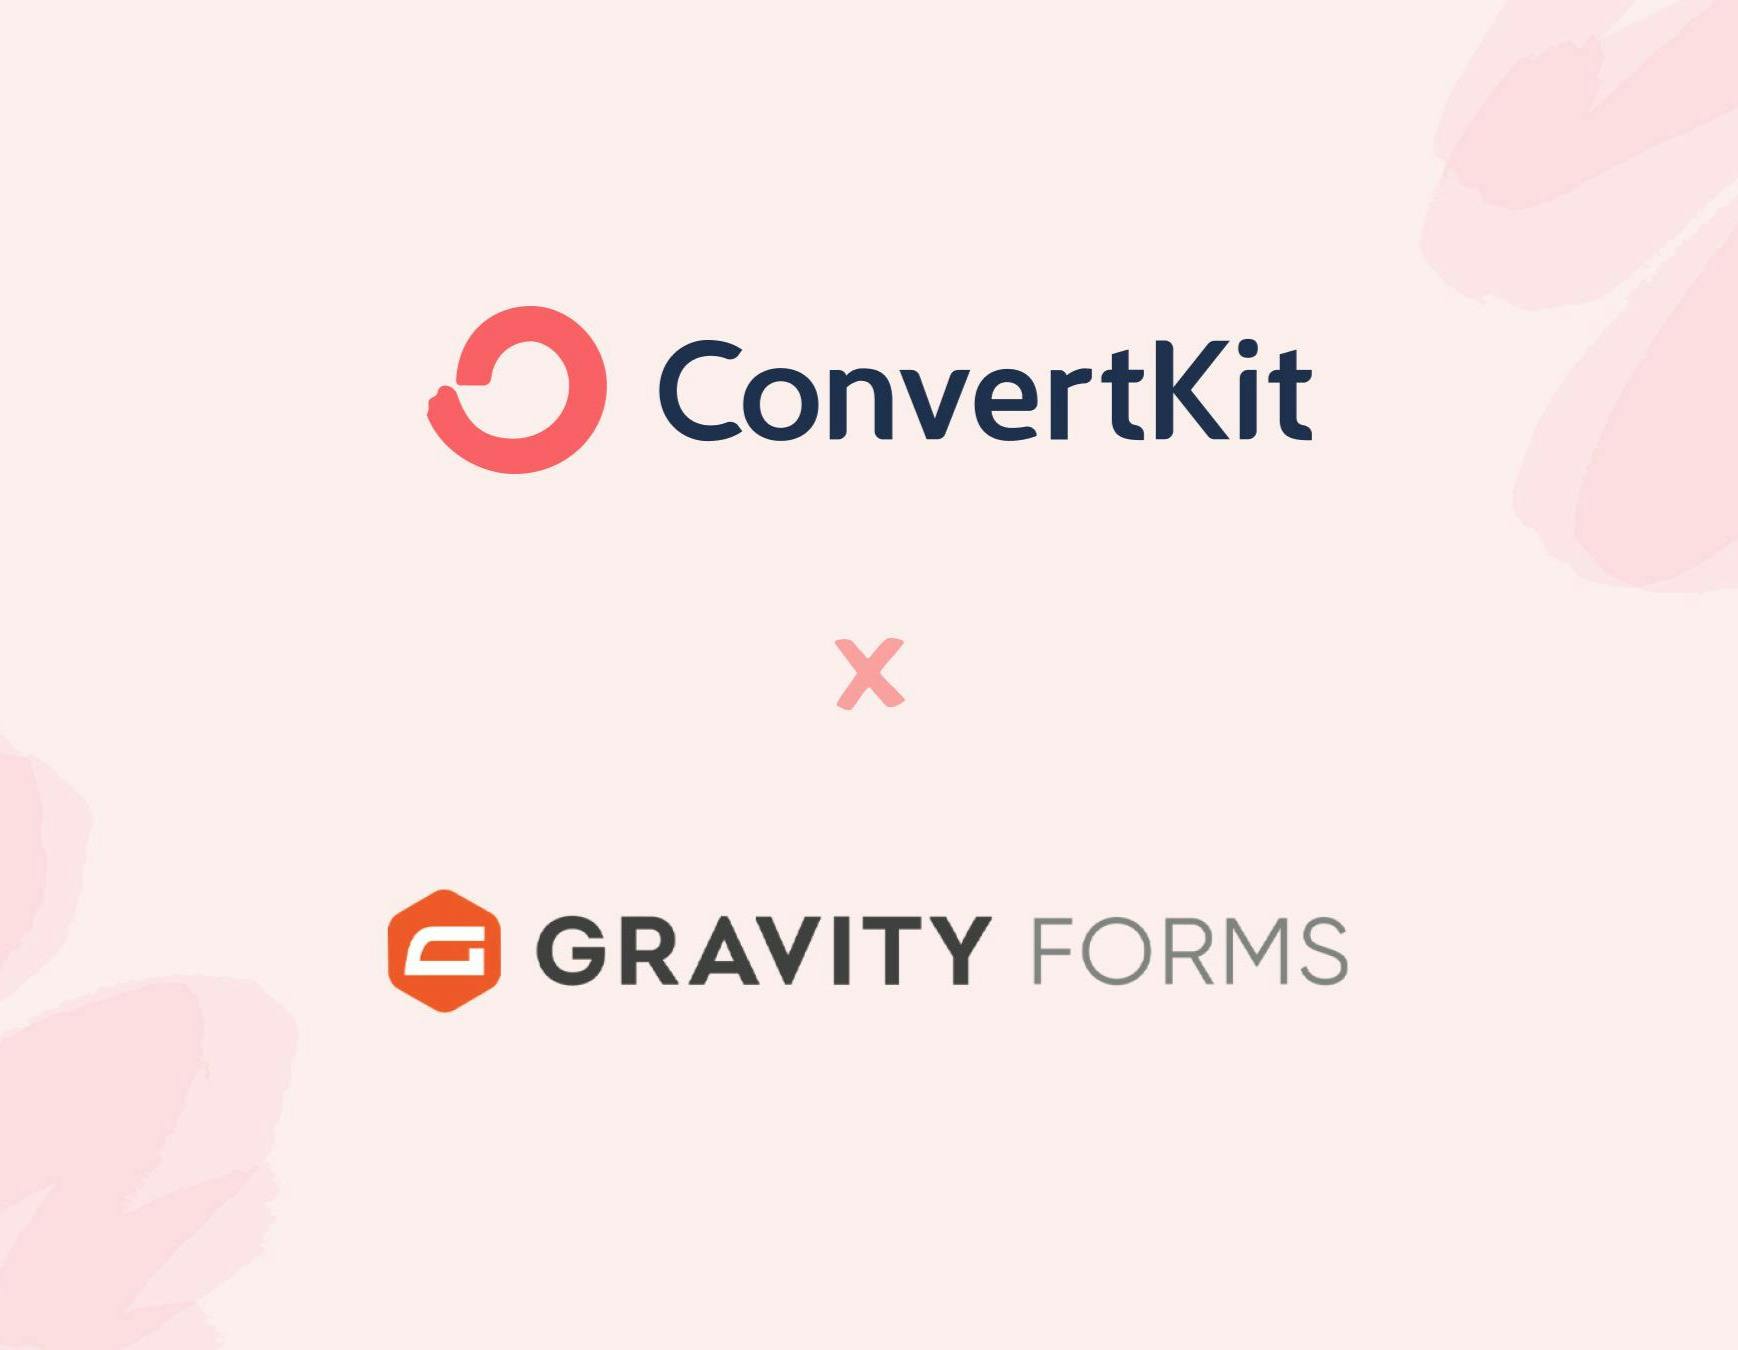 ConvertKit x Gravity Forms logos